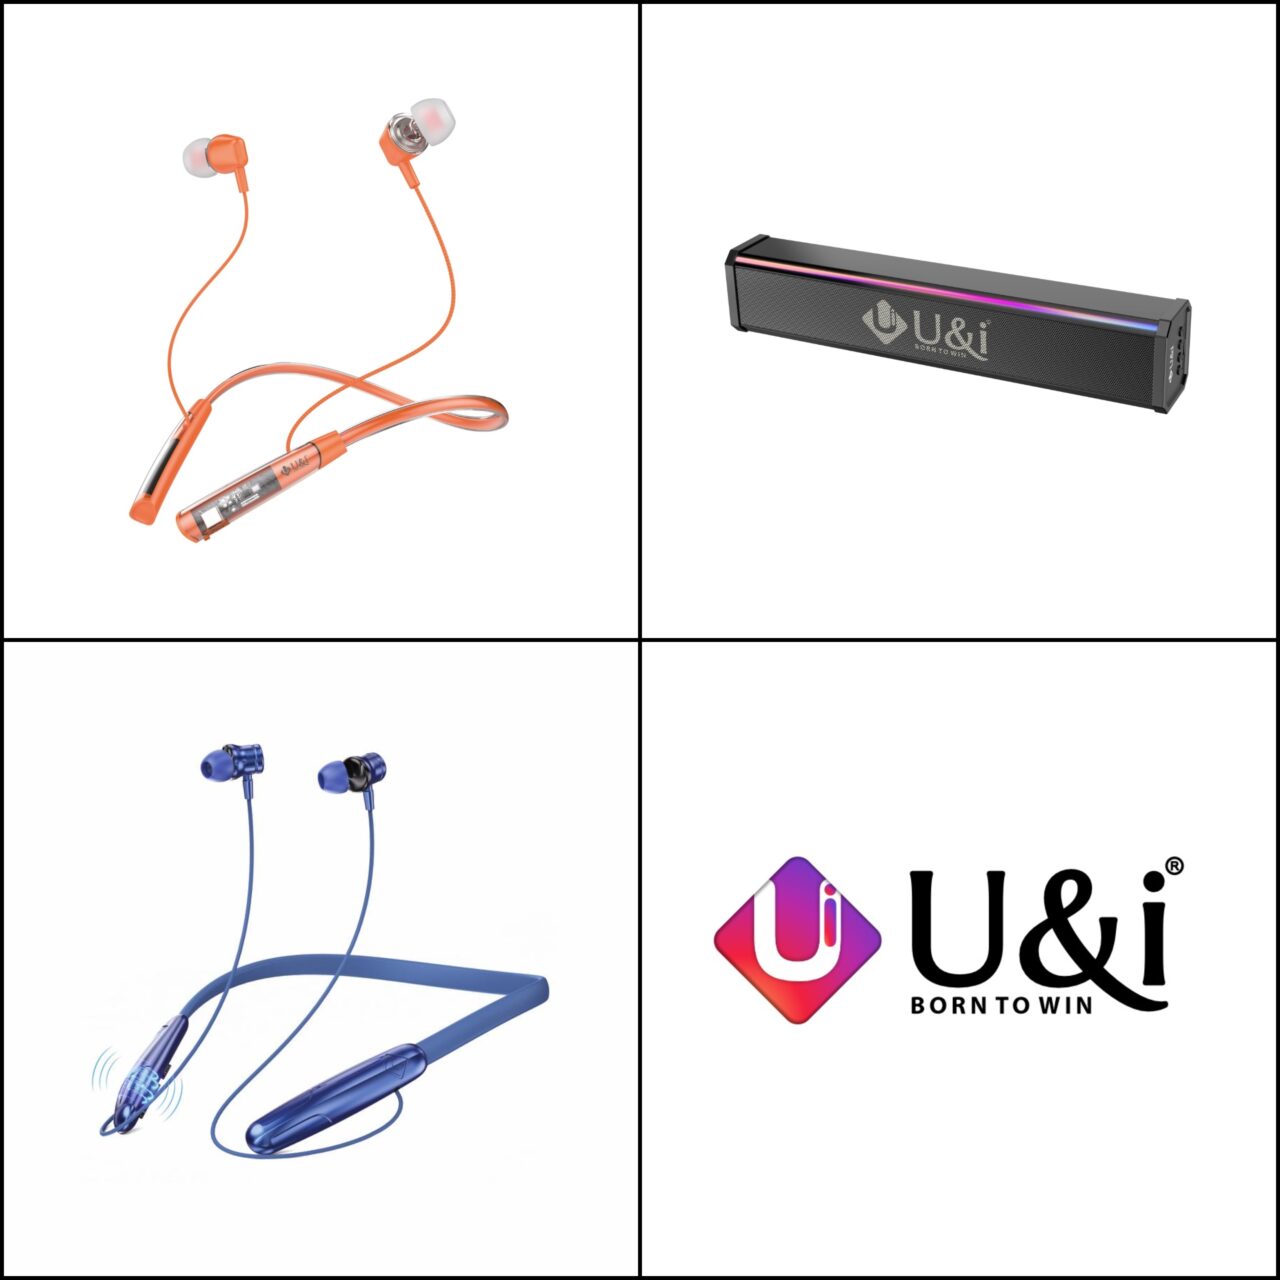 U&i Introduces New Bluetooth Audio Lineup for Diwali Celebrations